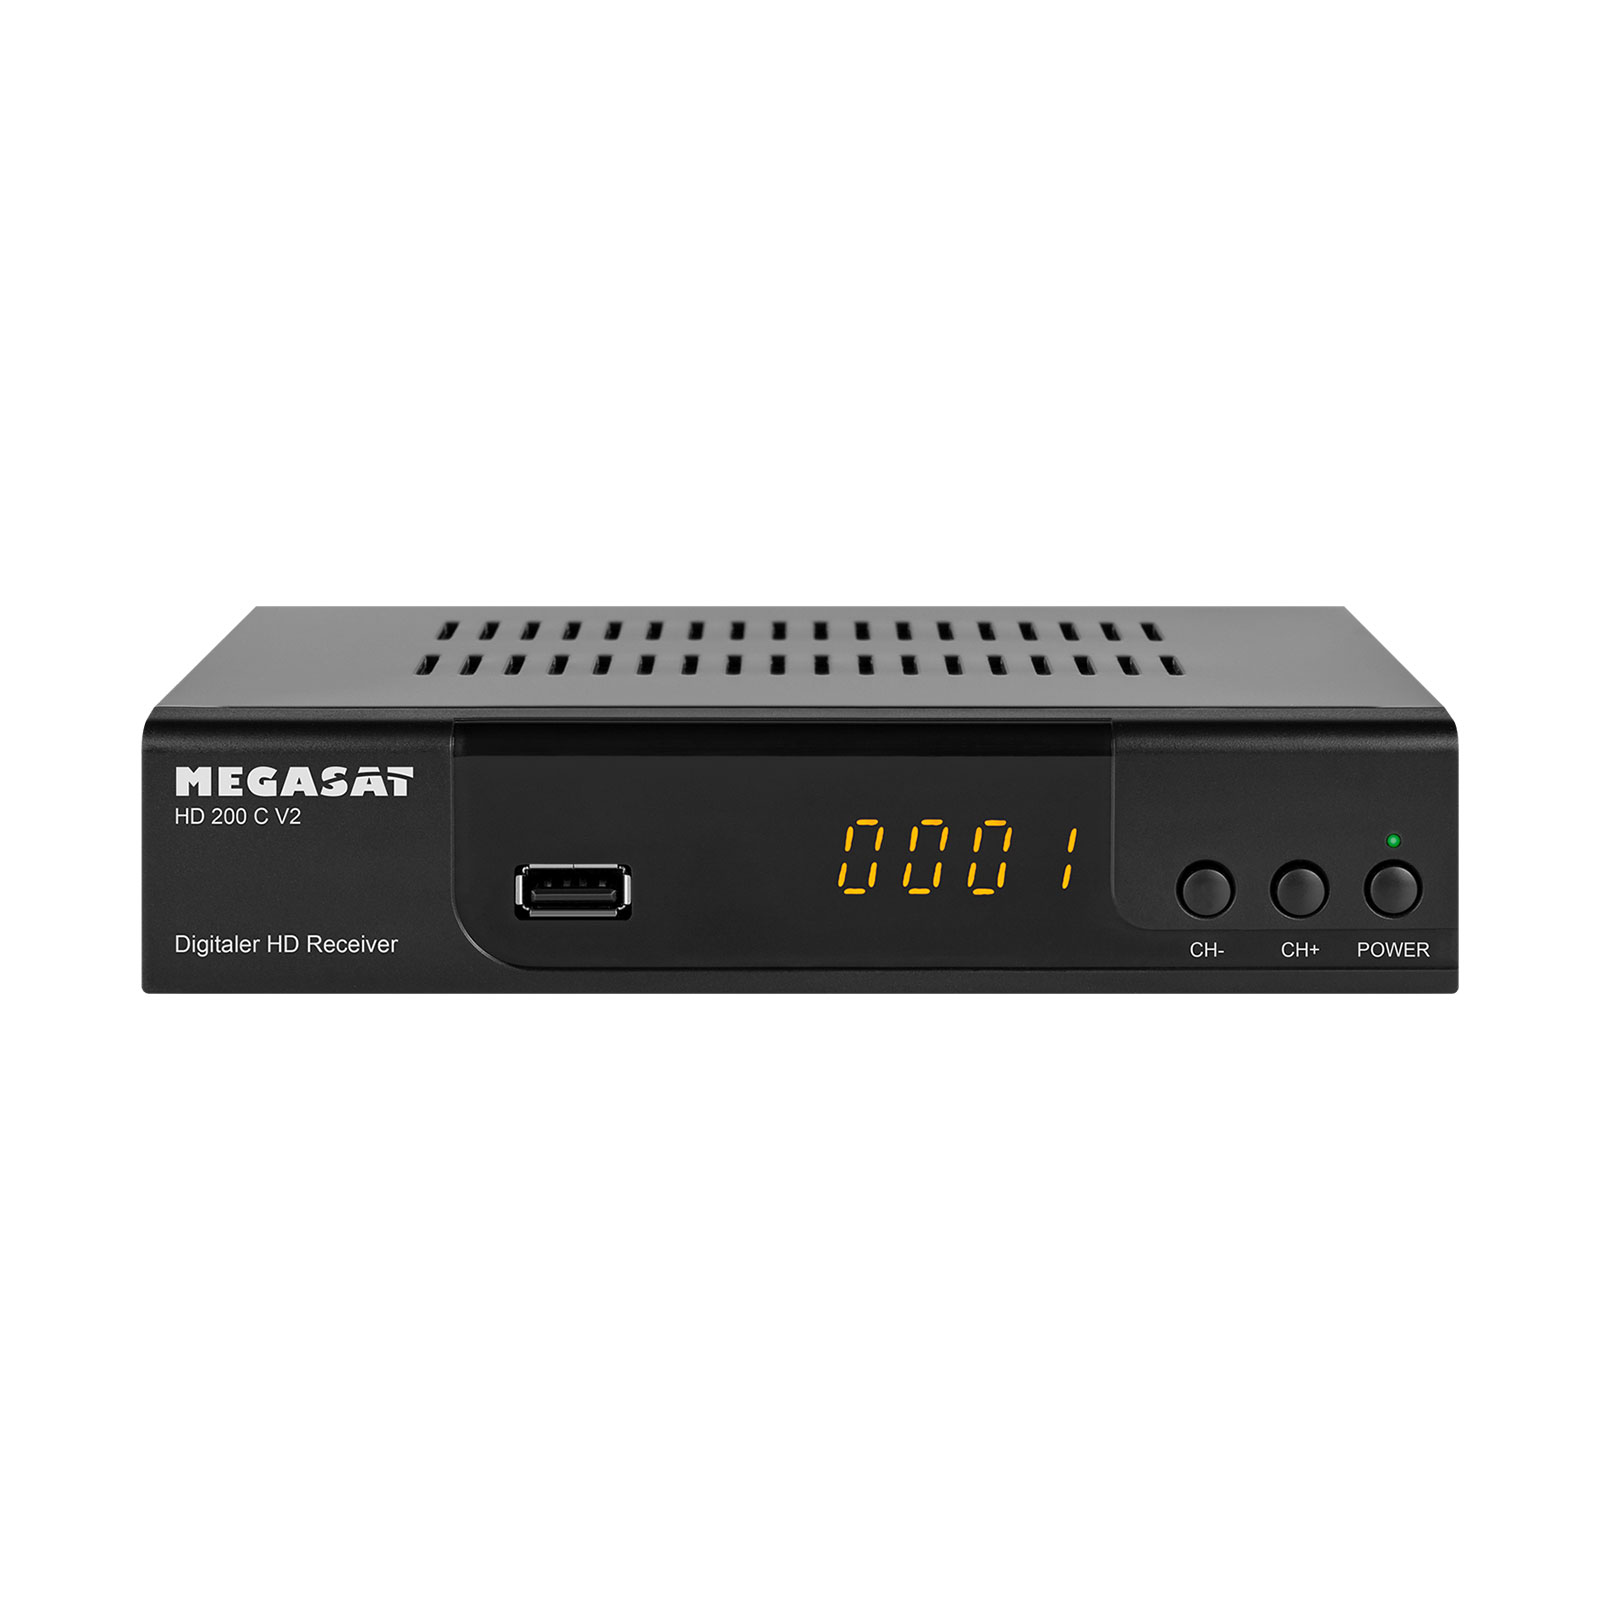 MEGASAT HD 200 C V2 DVB-C